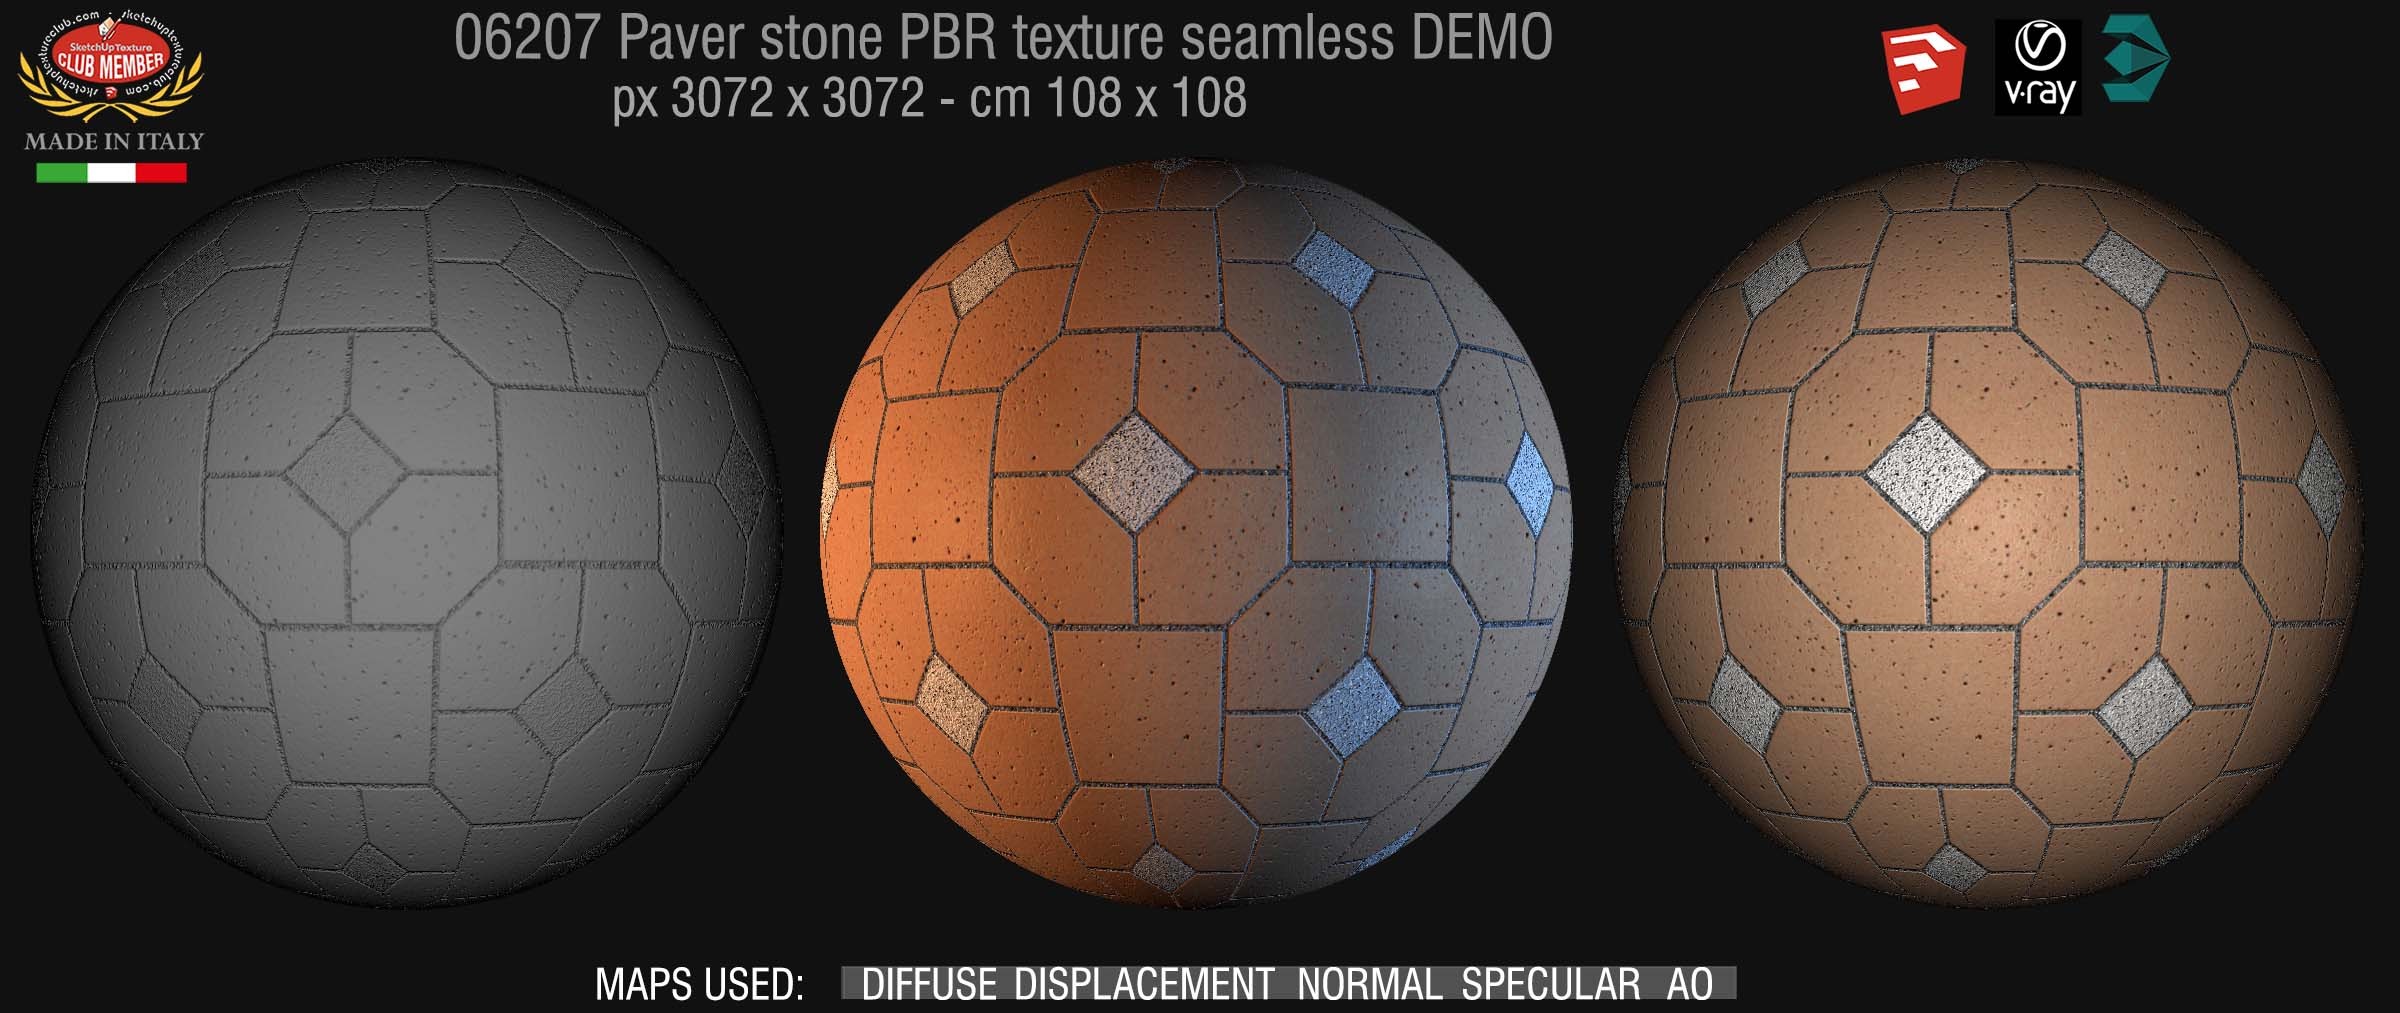 06207 Pavers stone PBR texture seamless DEMO